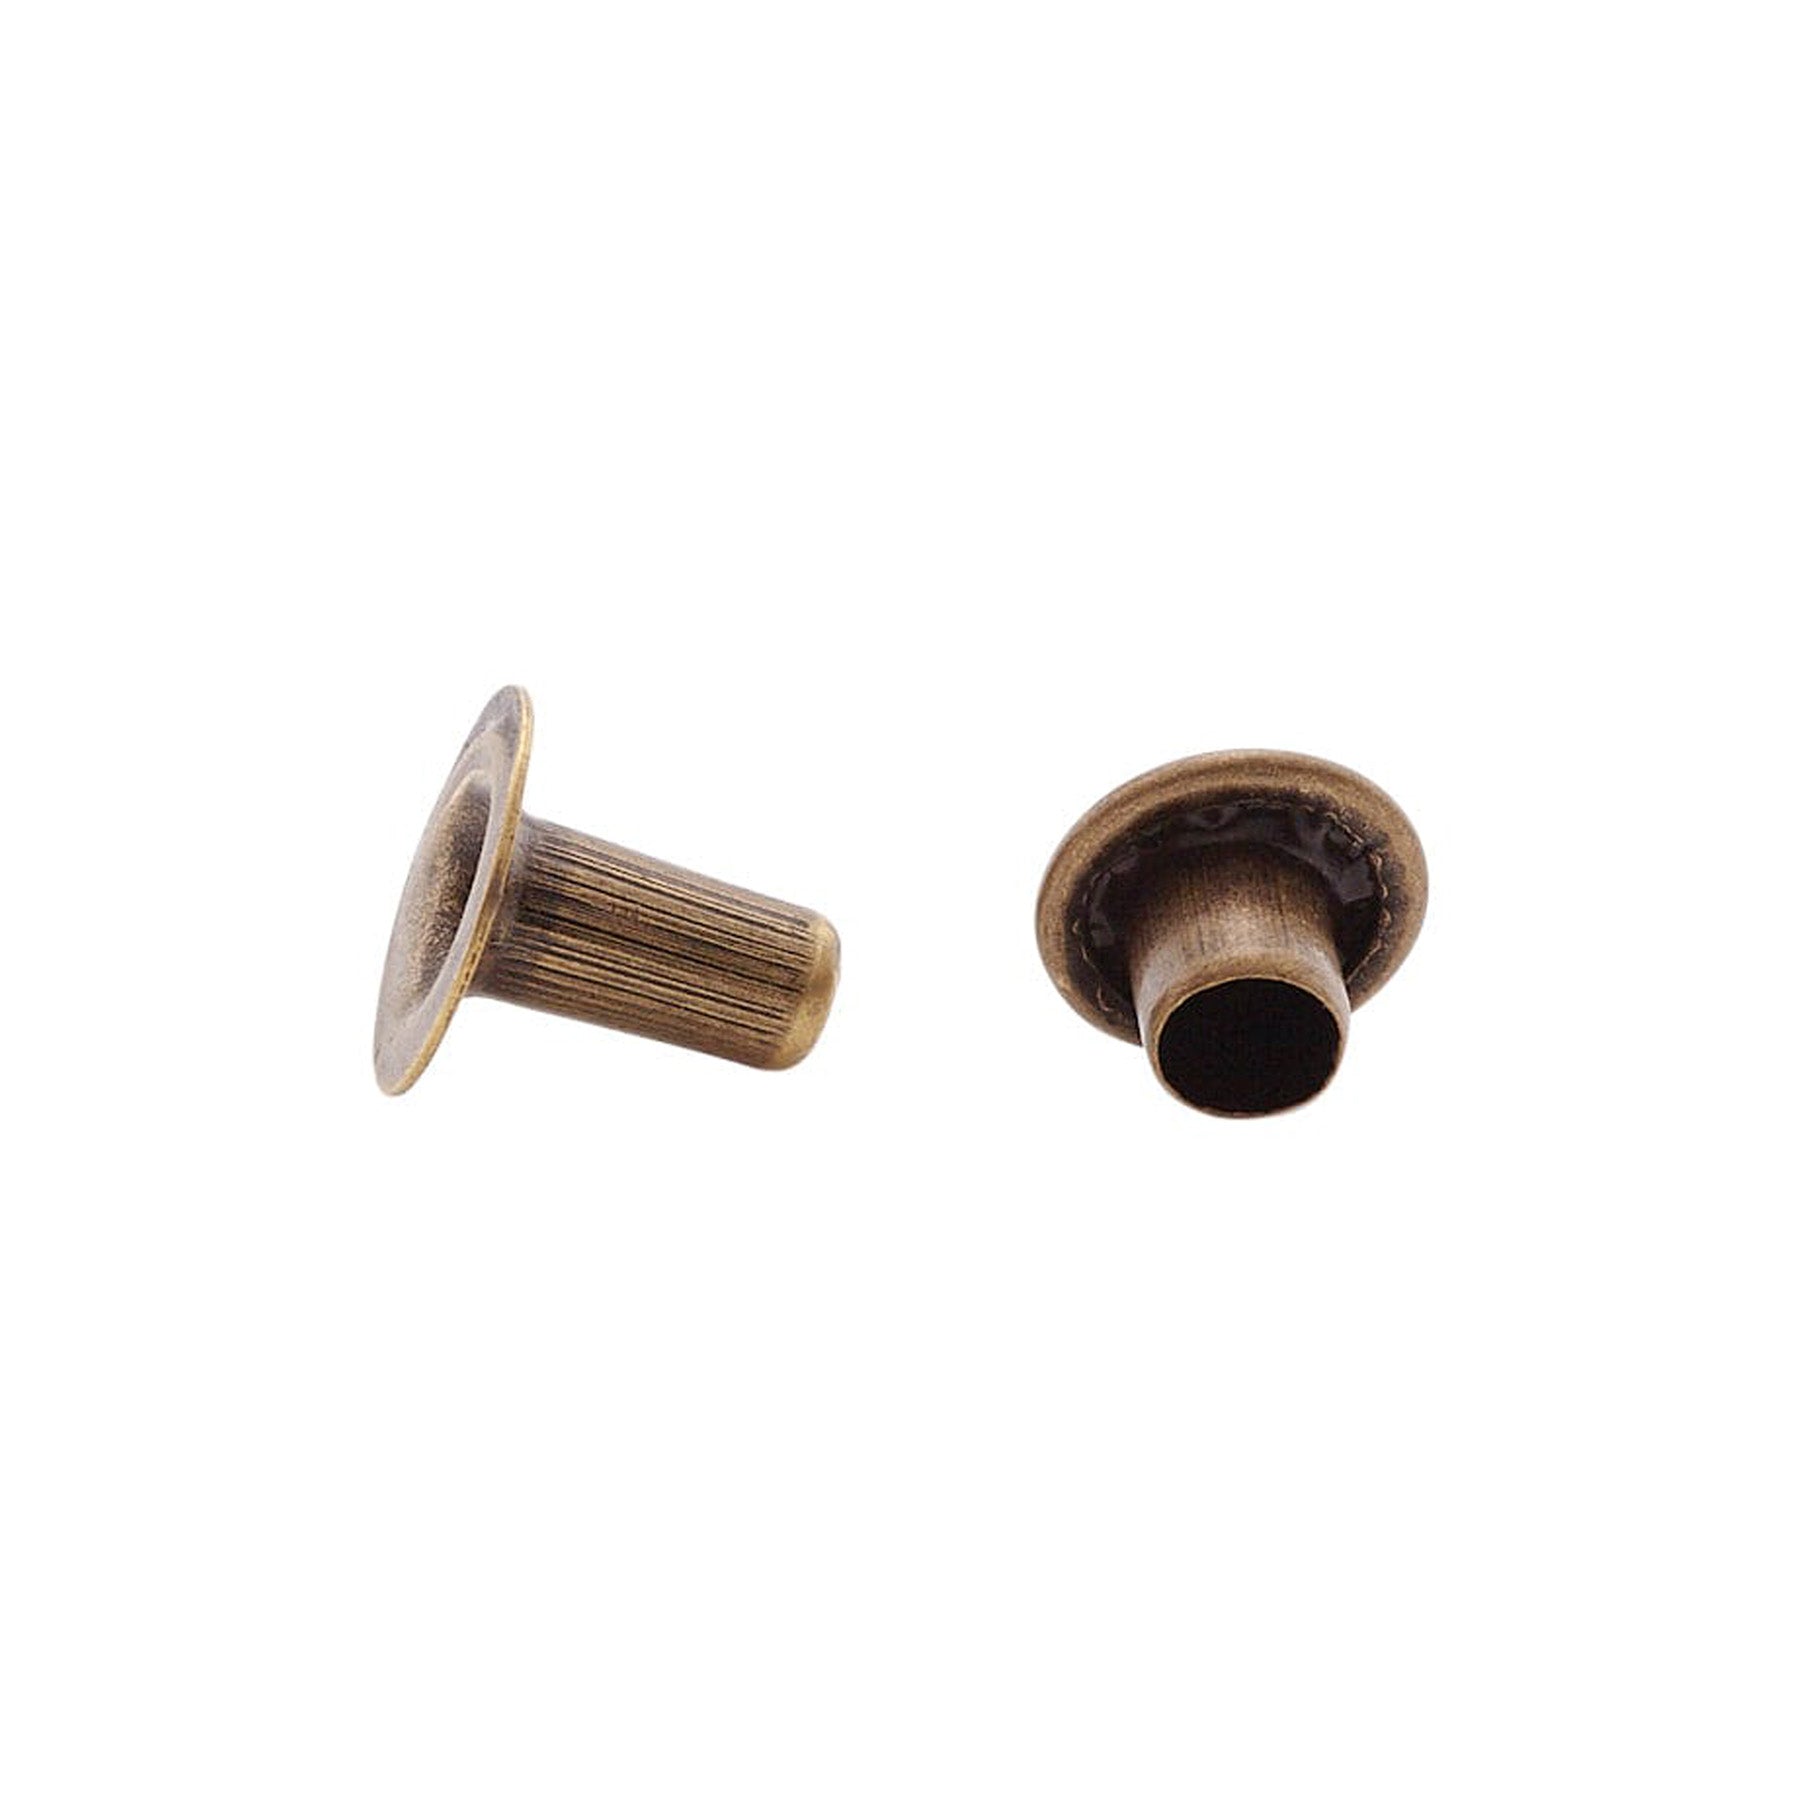 7mm Antique Brass, Single Cap Jiffy Rivets, Solid Brass-100ct, #NB307S-ANTB